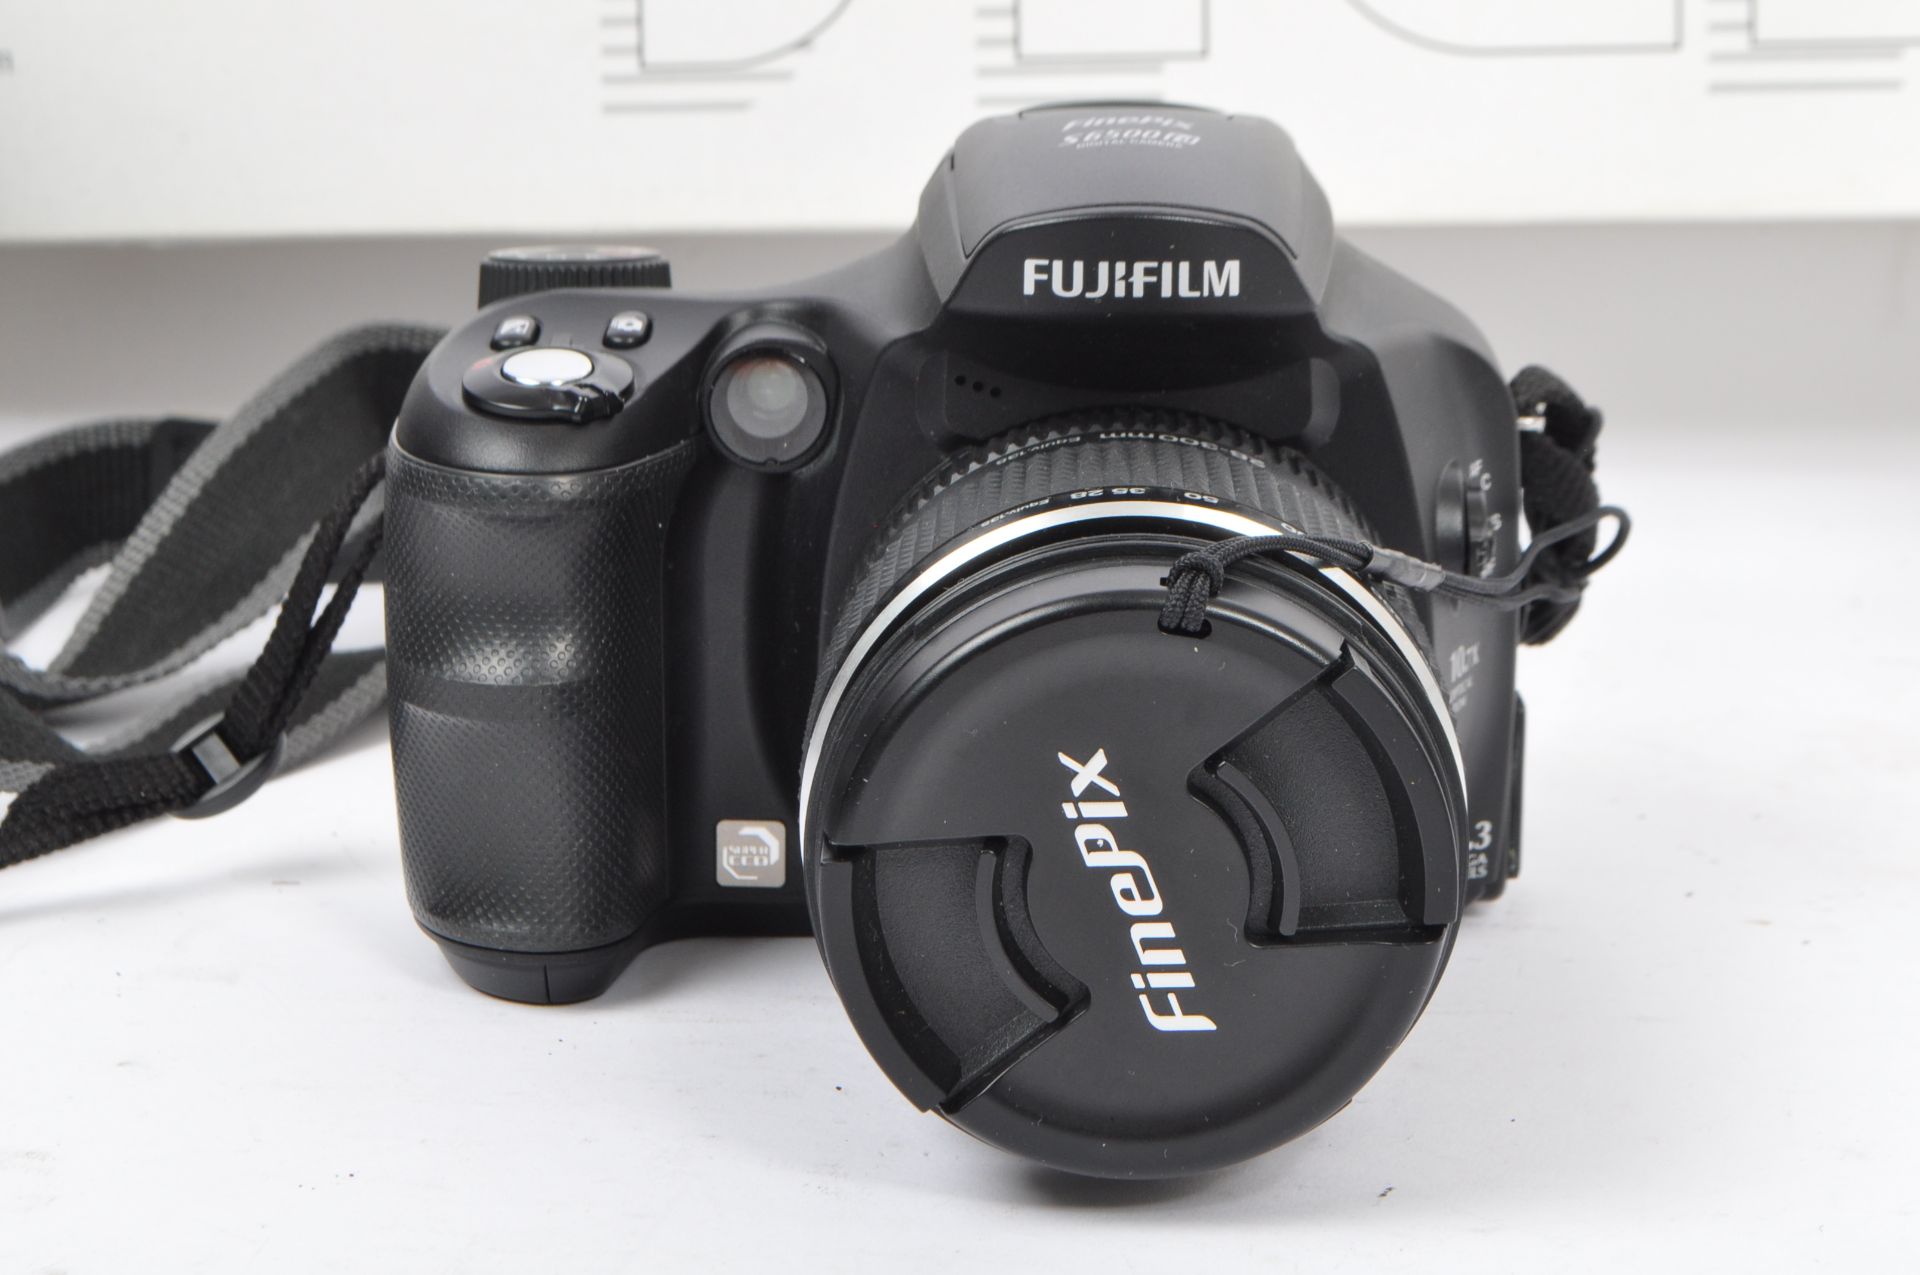 FUJIFILM - FINEPIX S65000 - CONTEMPORARY SLR DIGITAL CAMERA - Image 2 of 6